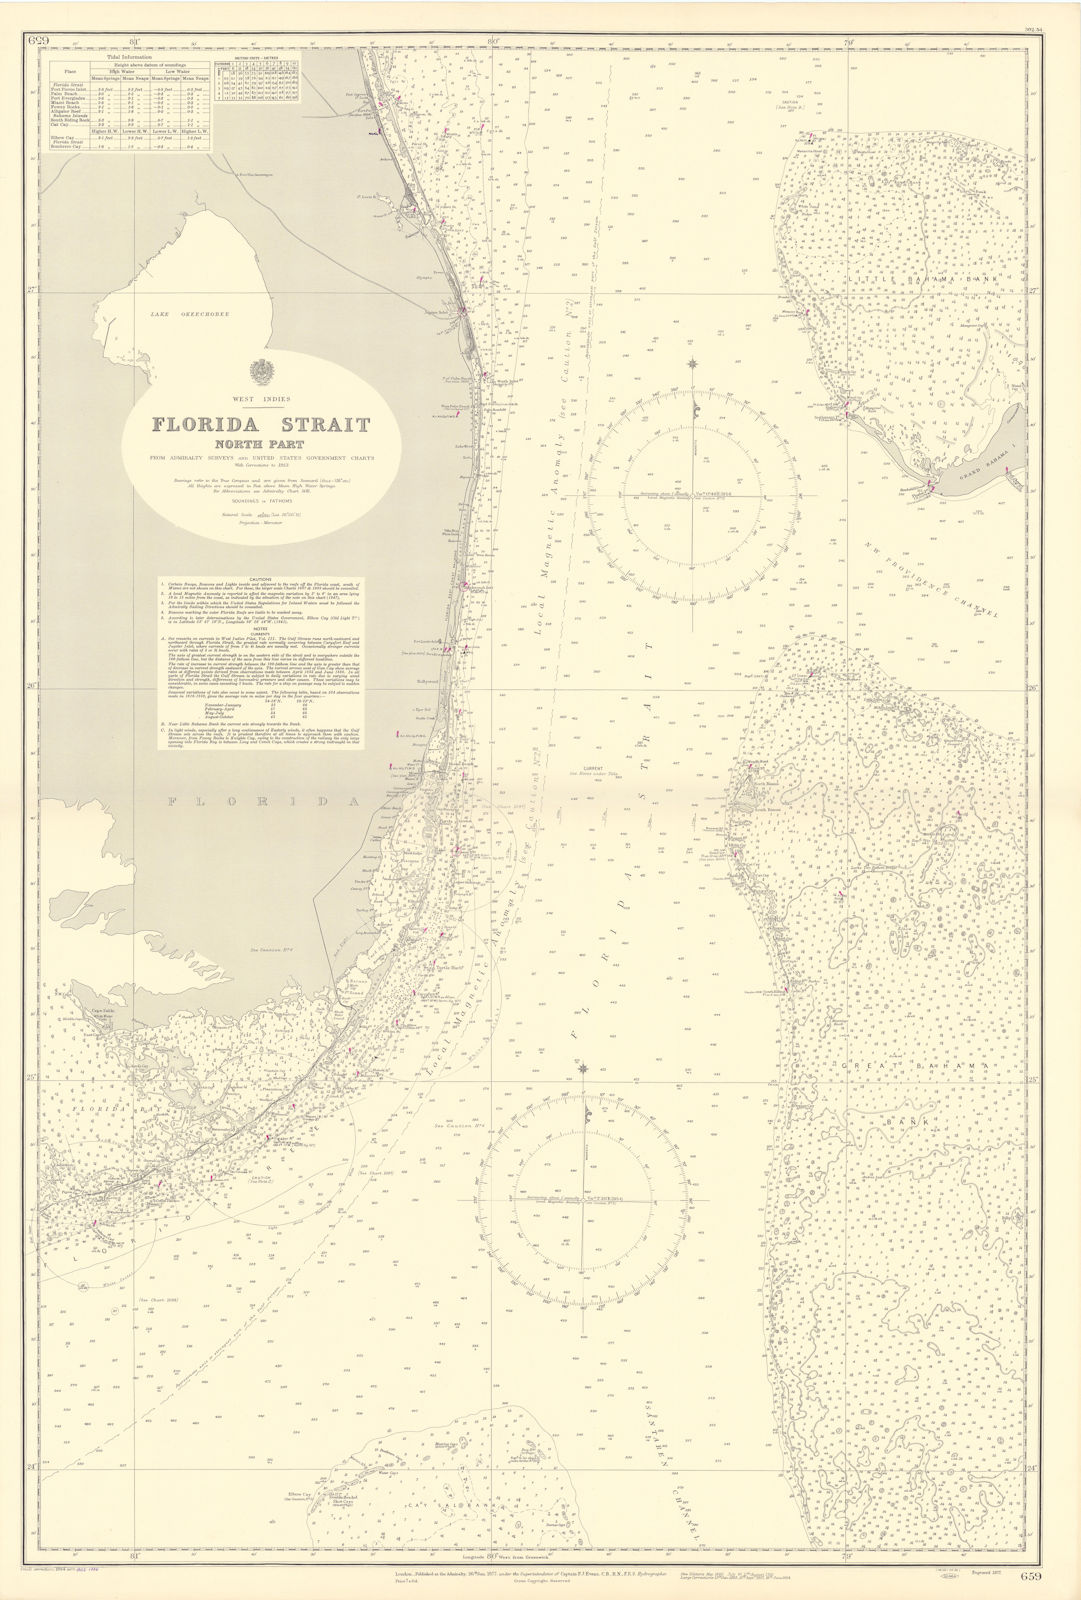 Northern Florida Strait. Miami Grand Bahama. ADMIRALTY sea chart 1877 (1955) map